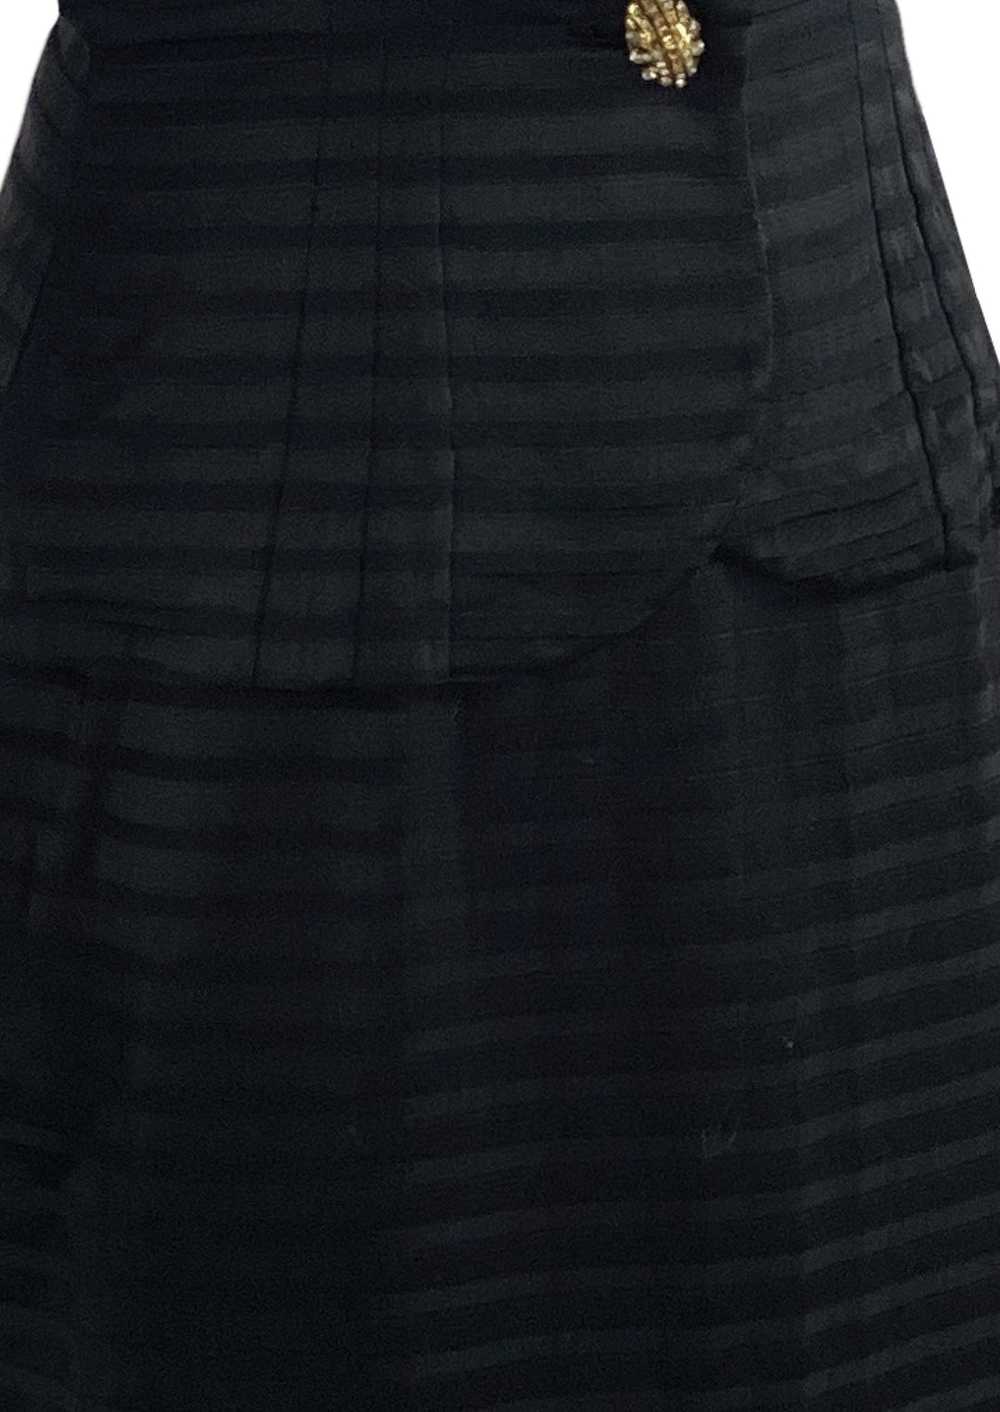 Vintage Late 1940s Designer Black Striped Cocktai… - image 8